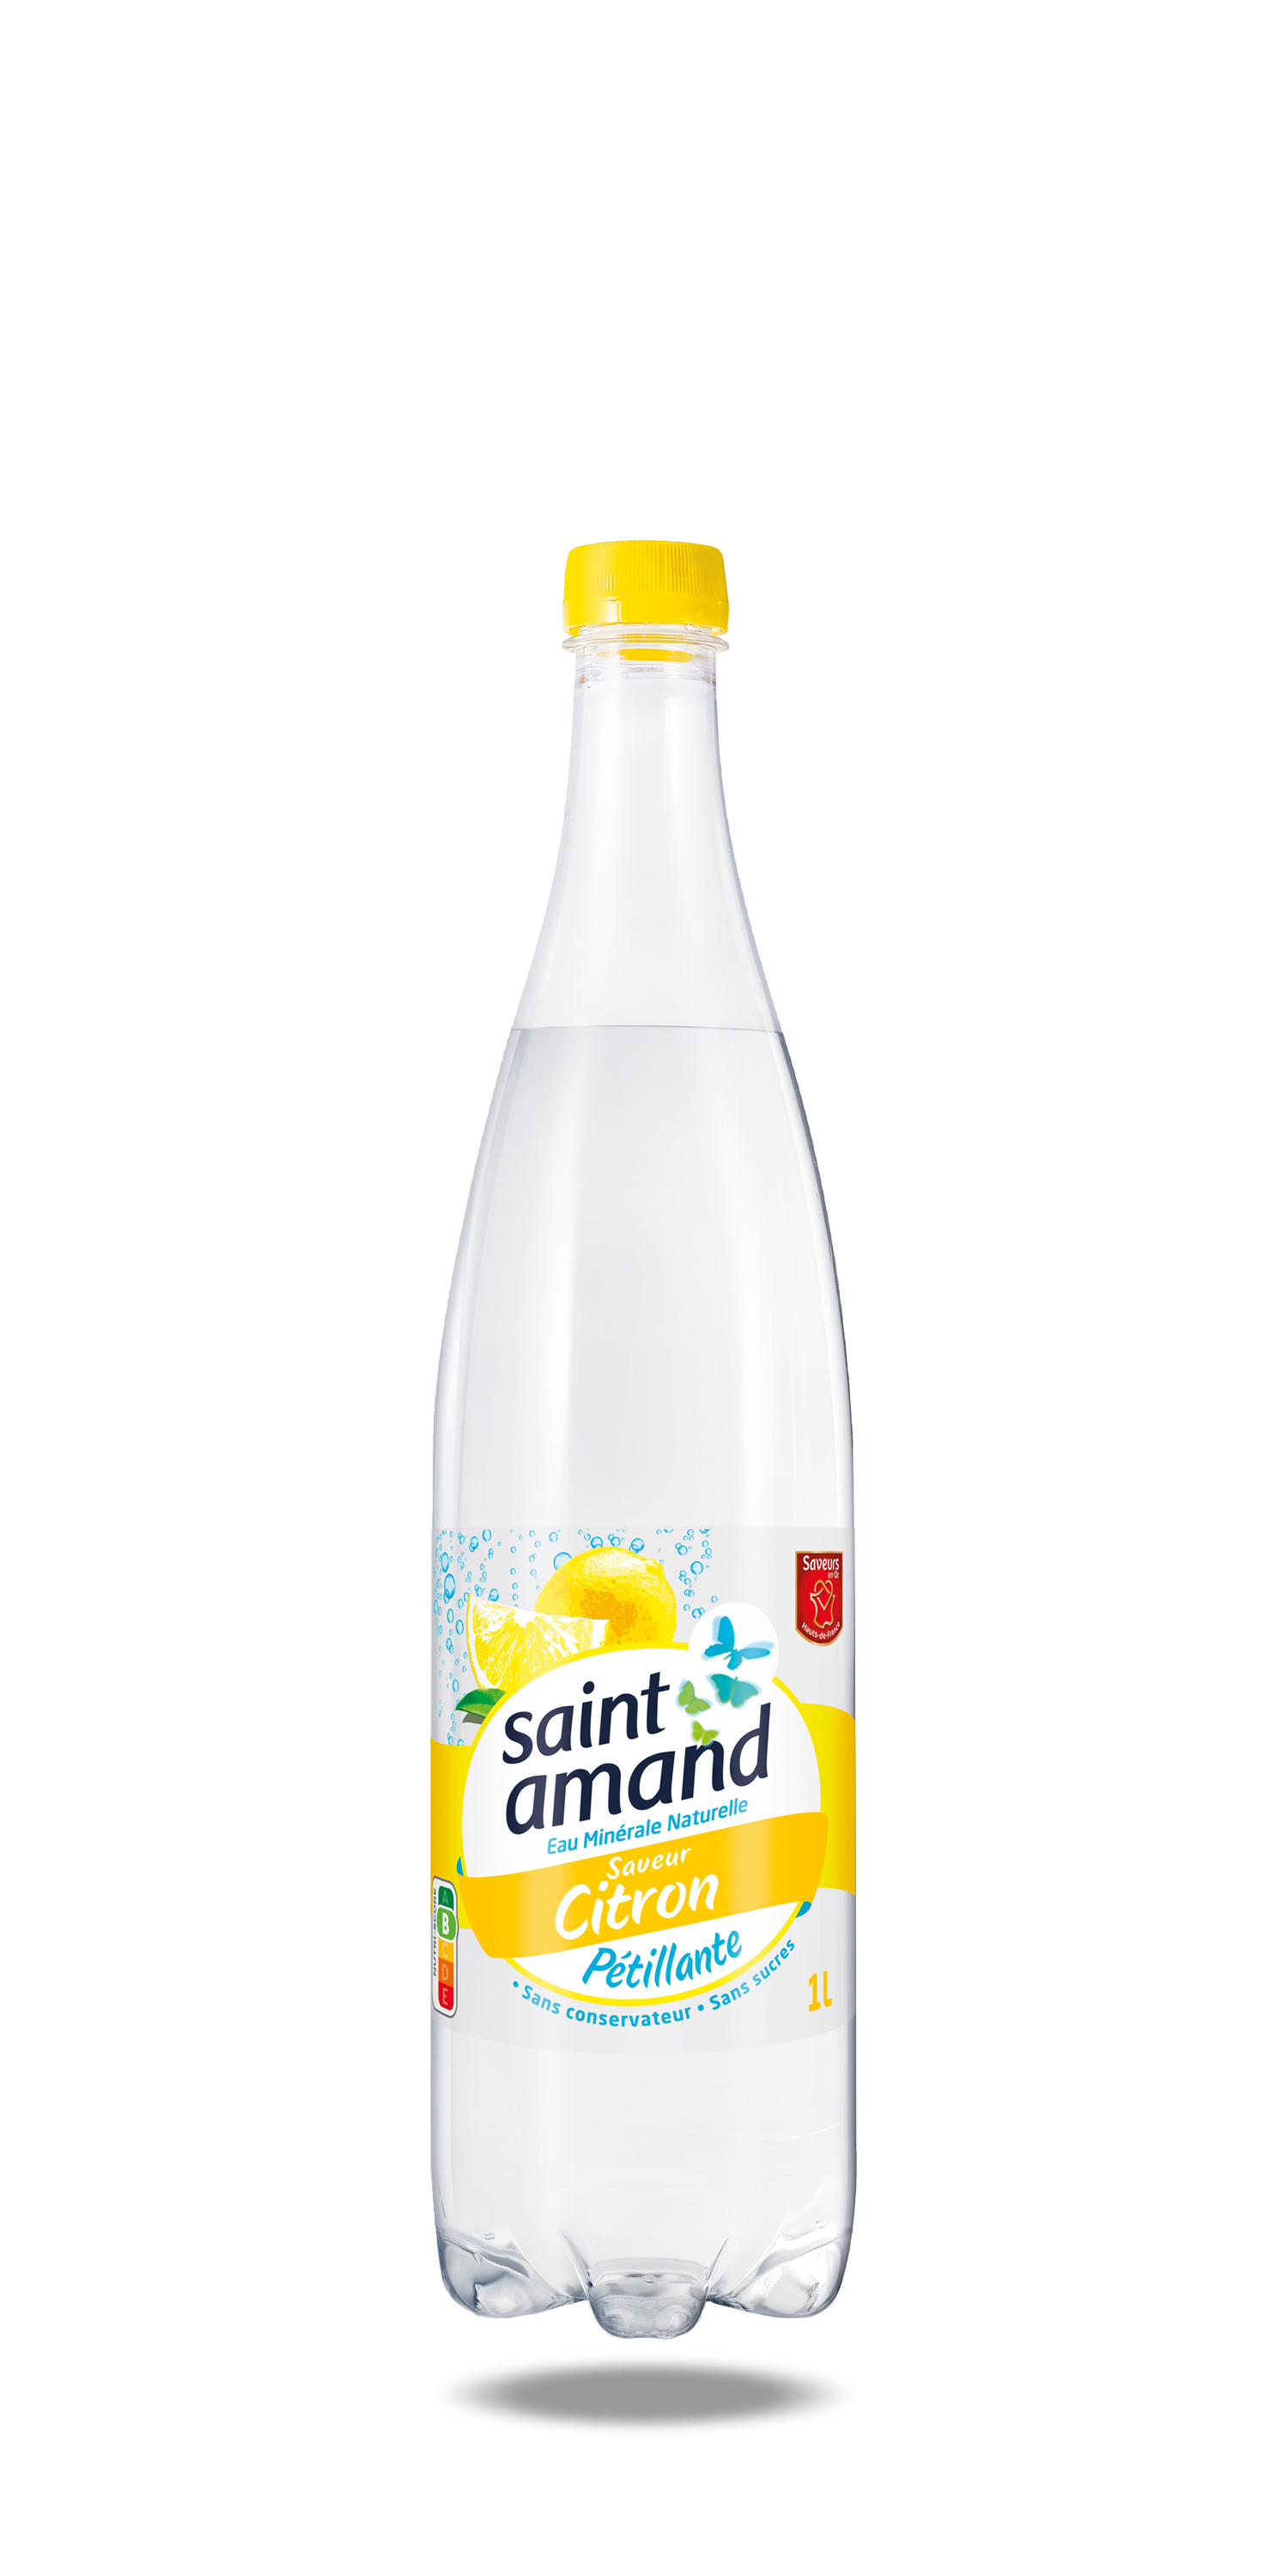 Saint Amand pétillante citron